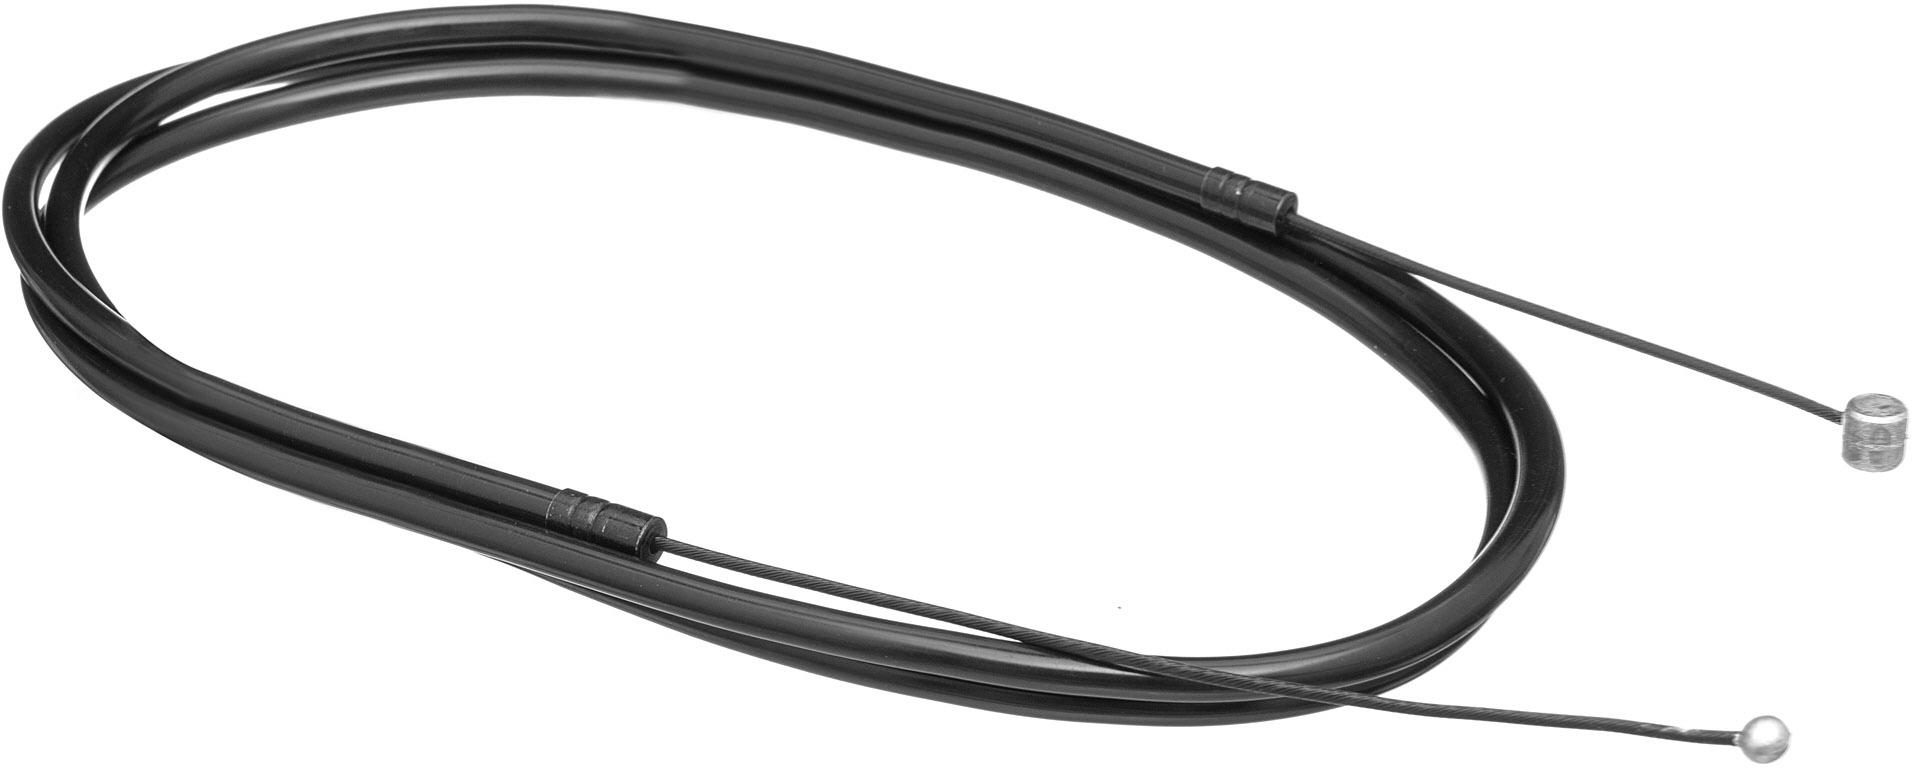 Seal Bmx Progression Linear Brake Cable - Black